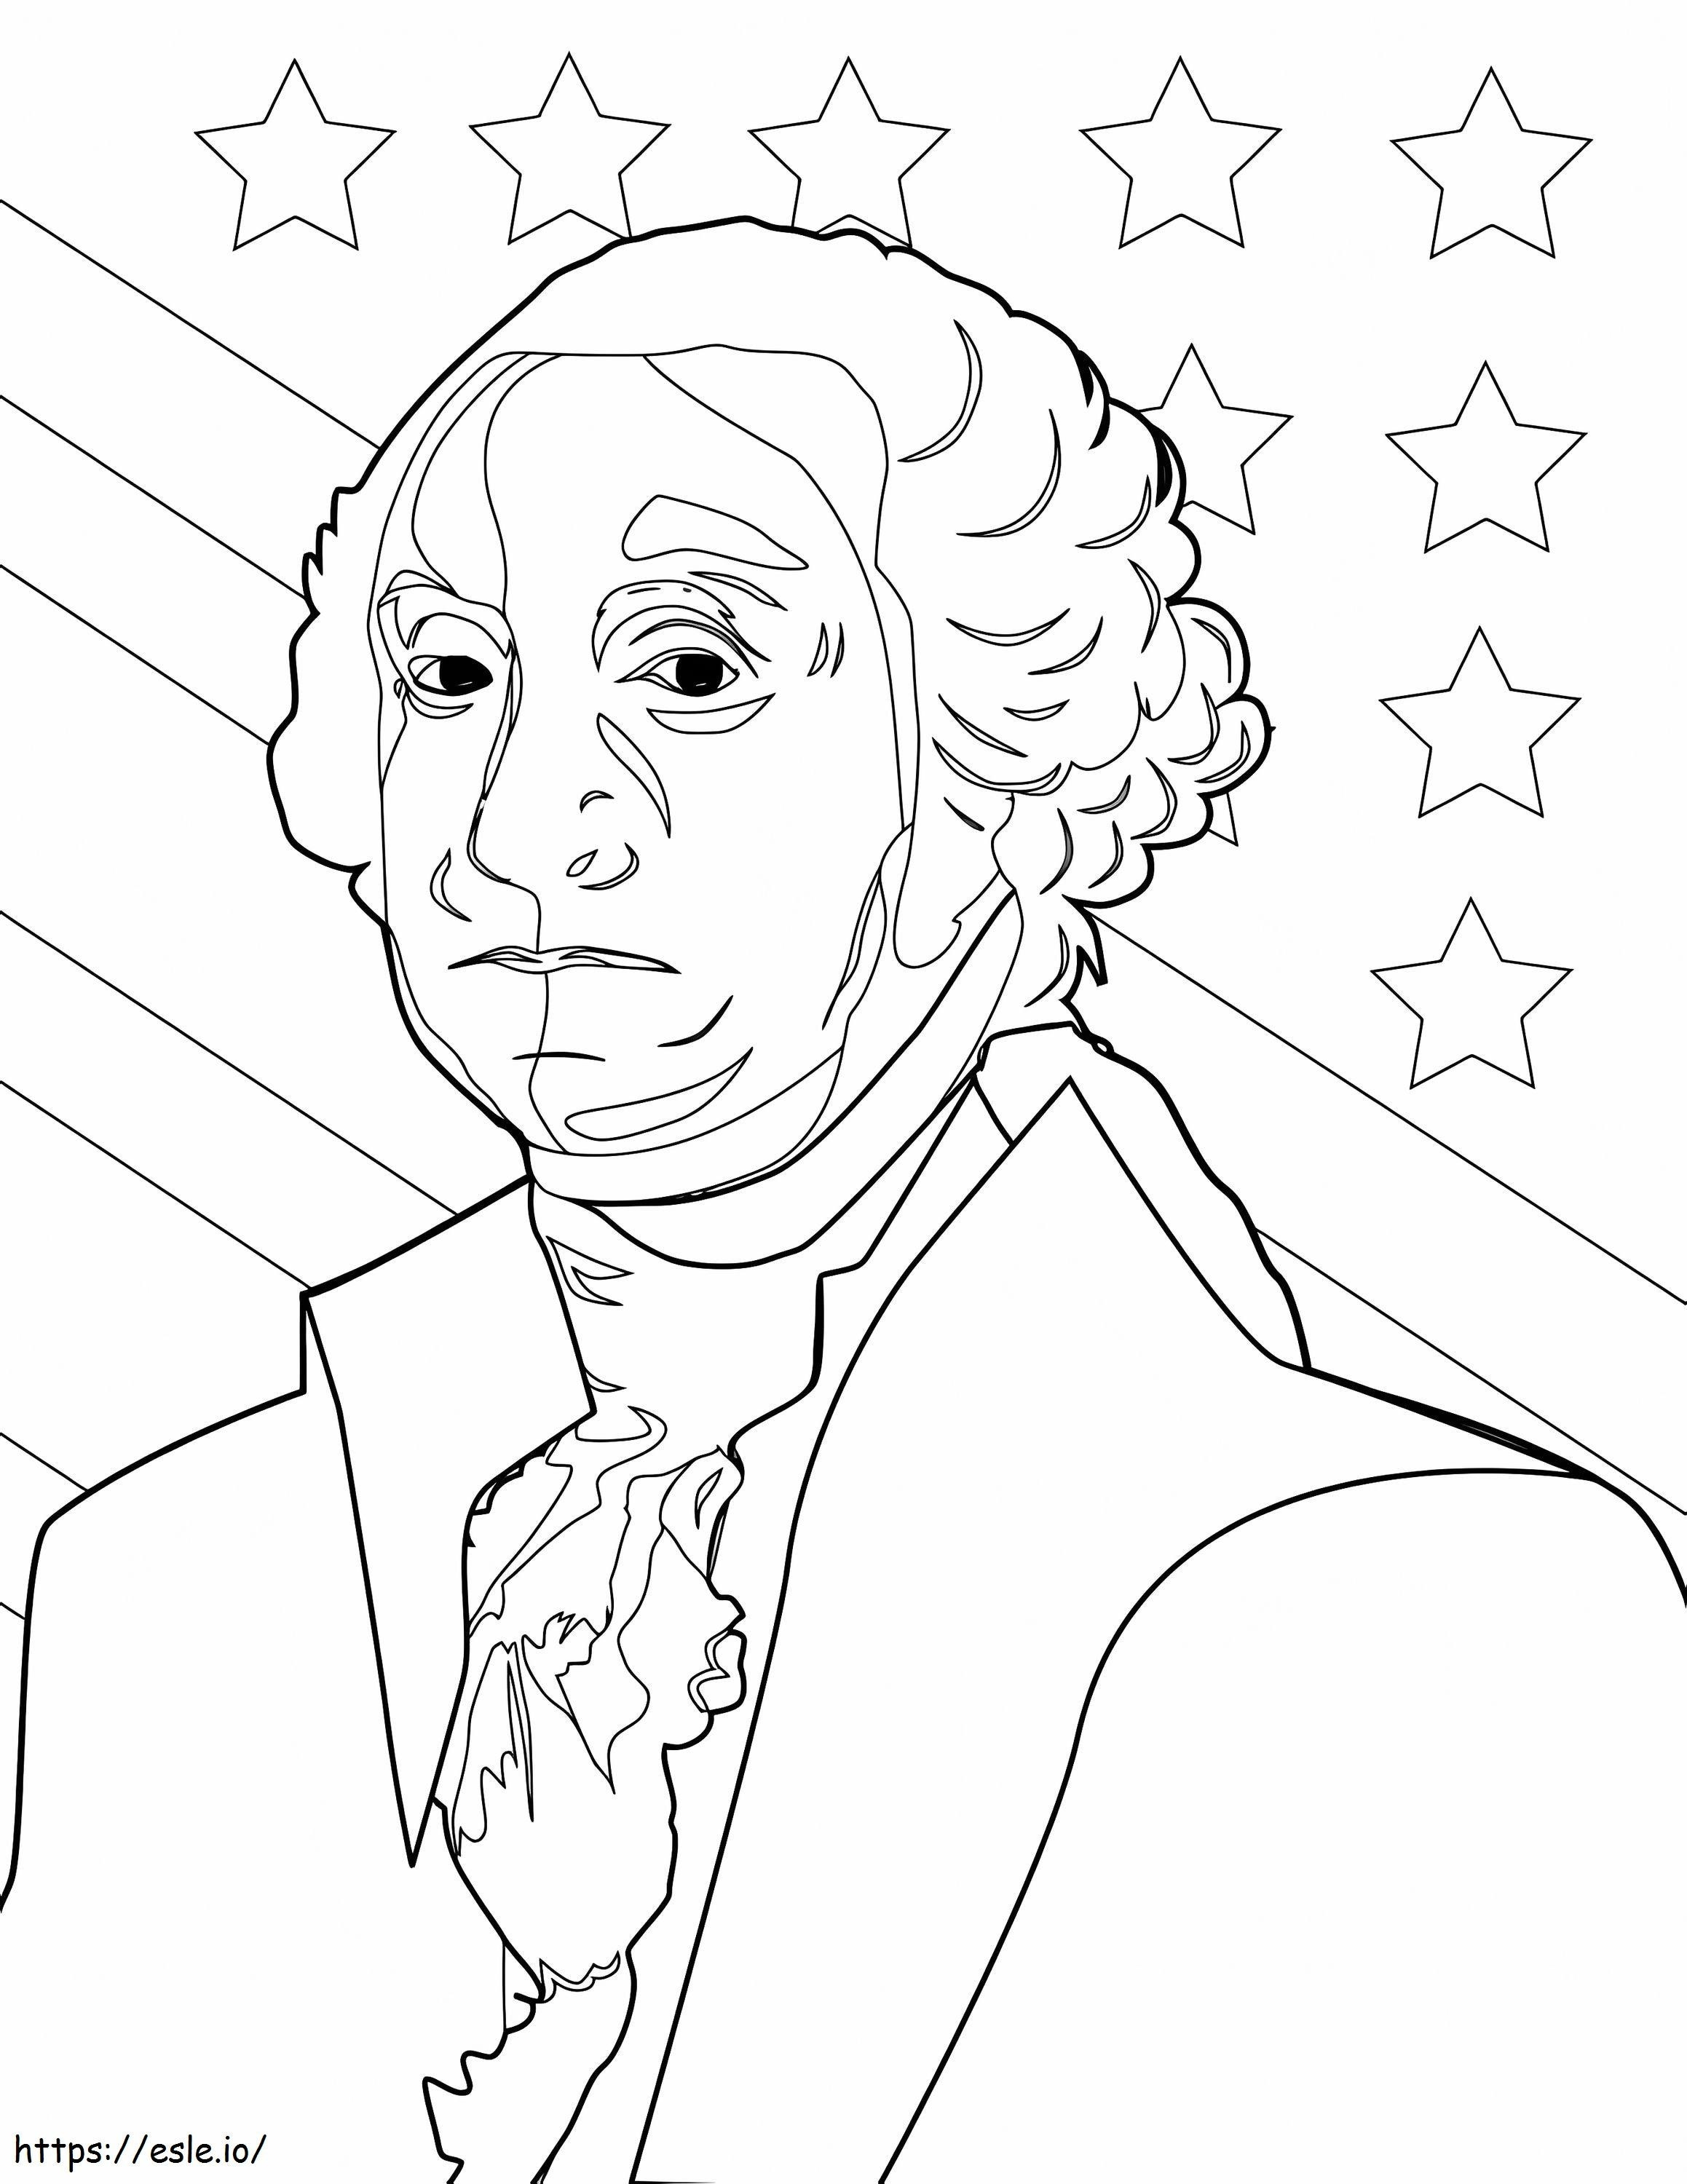 George Washington 17 ausmalbilder